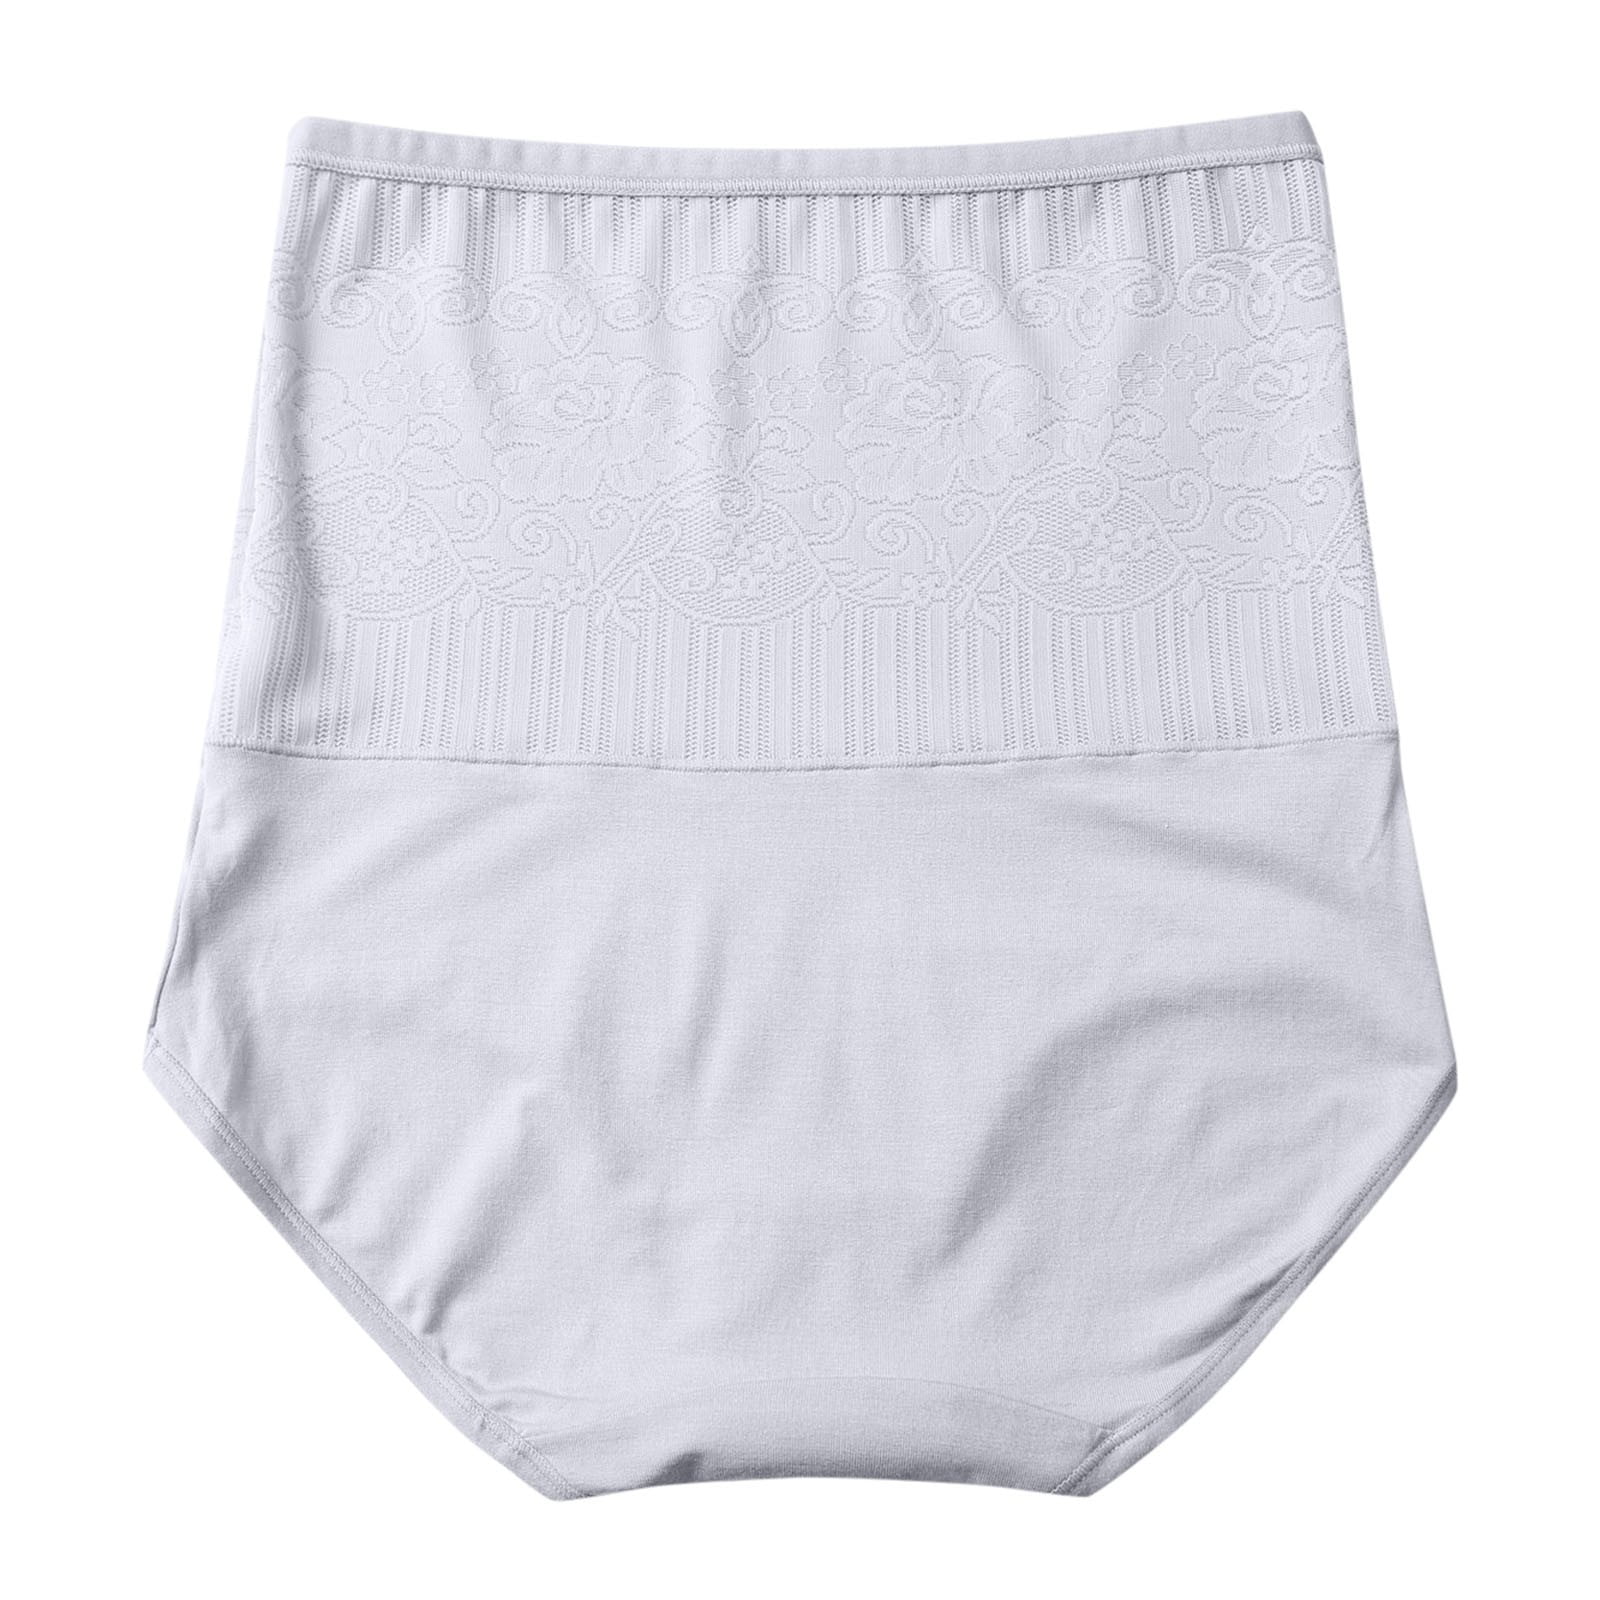 wendunide lingerie for women Back Body Shaper Big Butt Pad Seamless High  Waist Control Brief Shapers Panties Underwear Shapewear Black XL